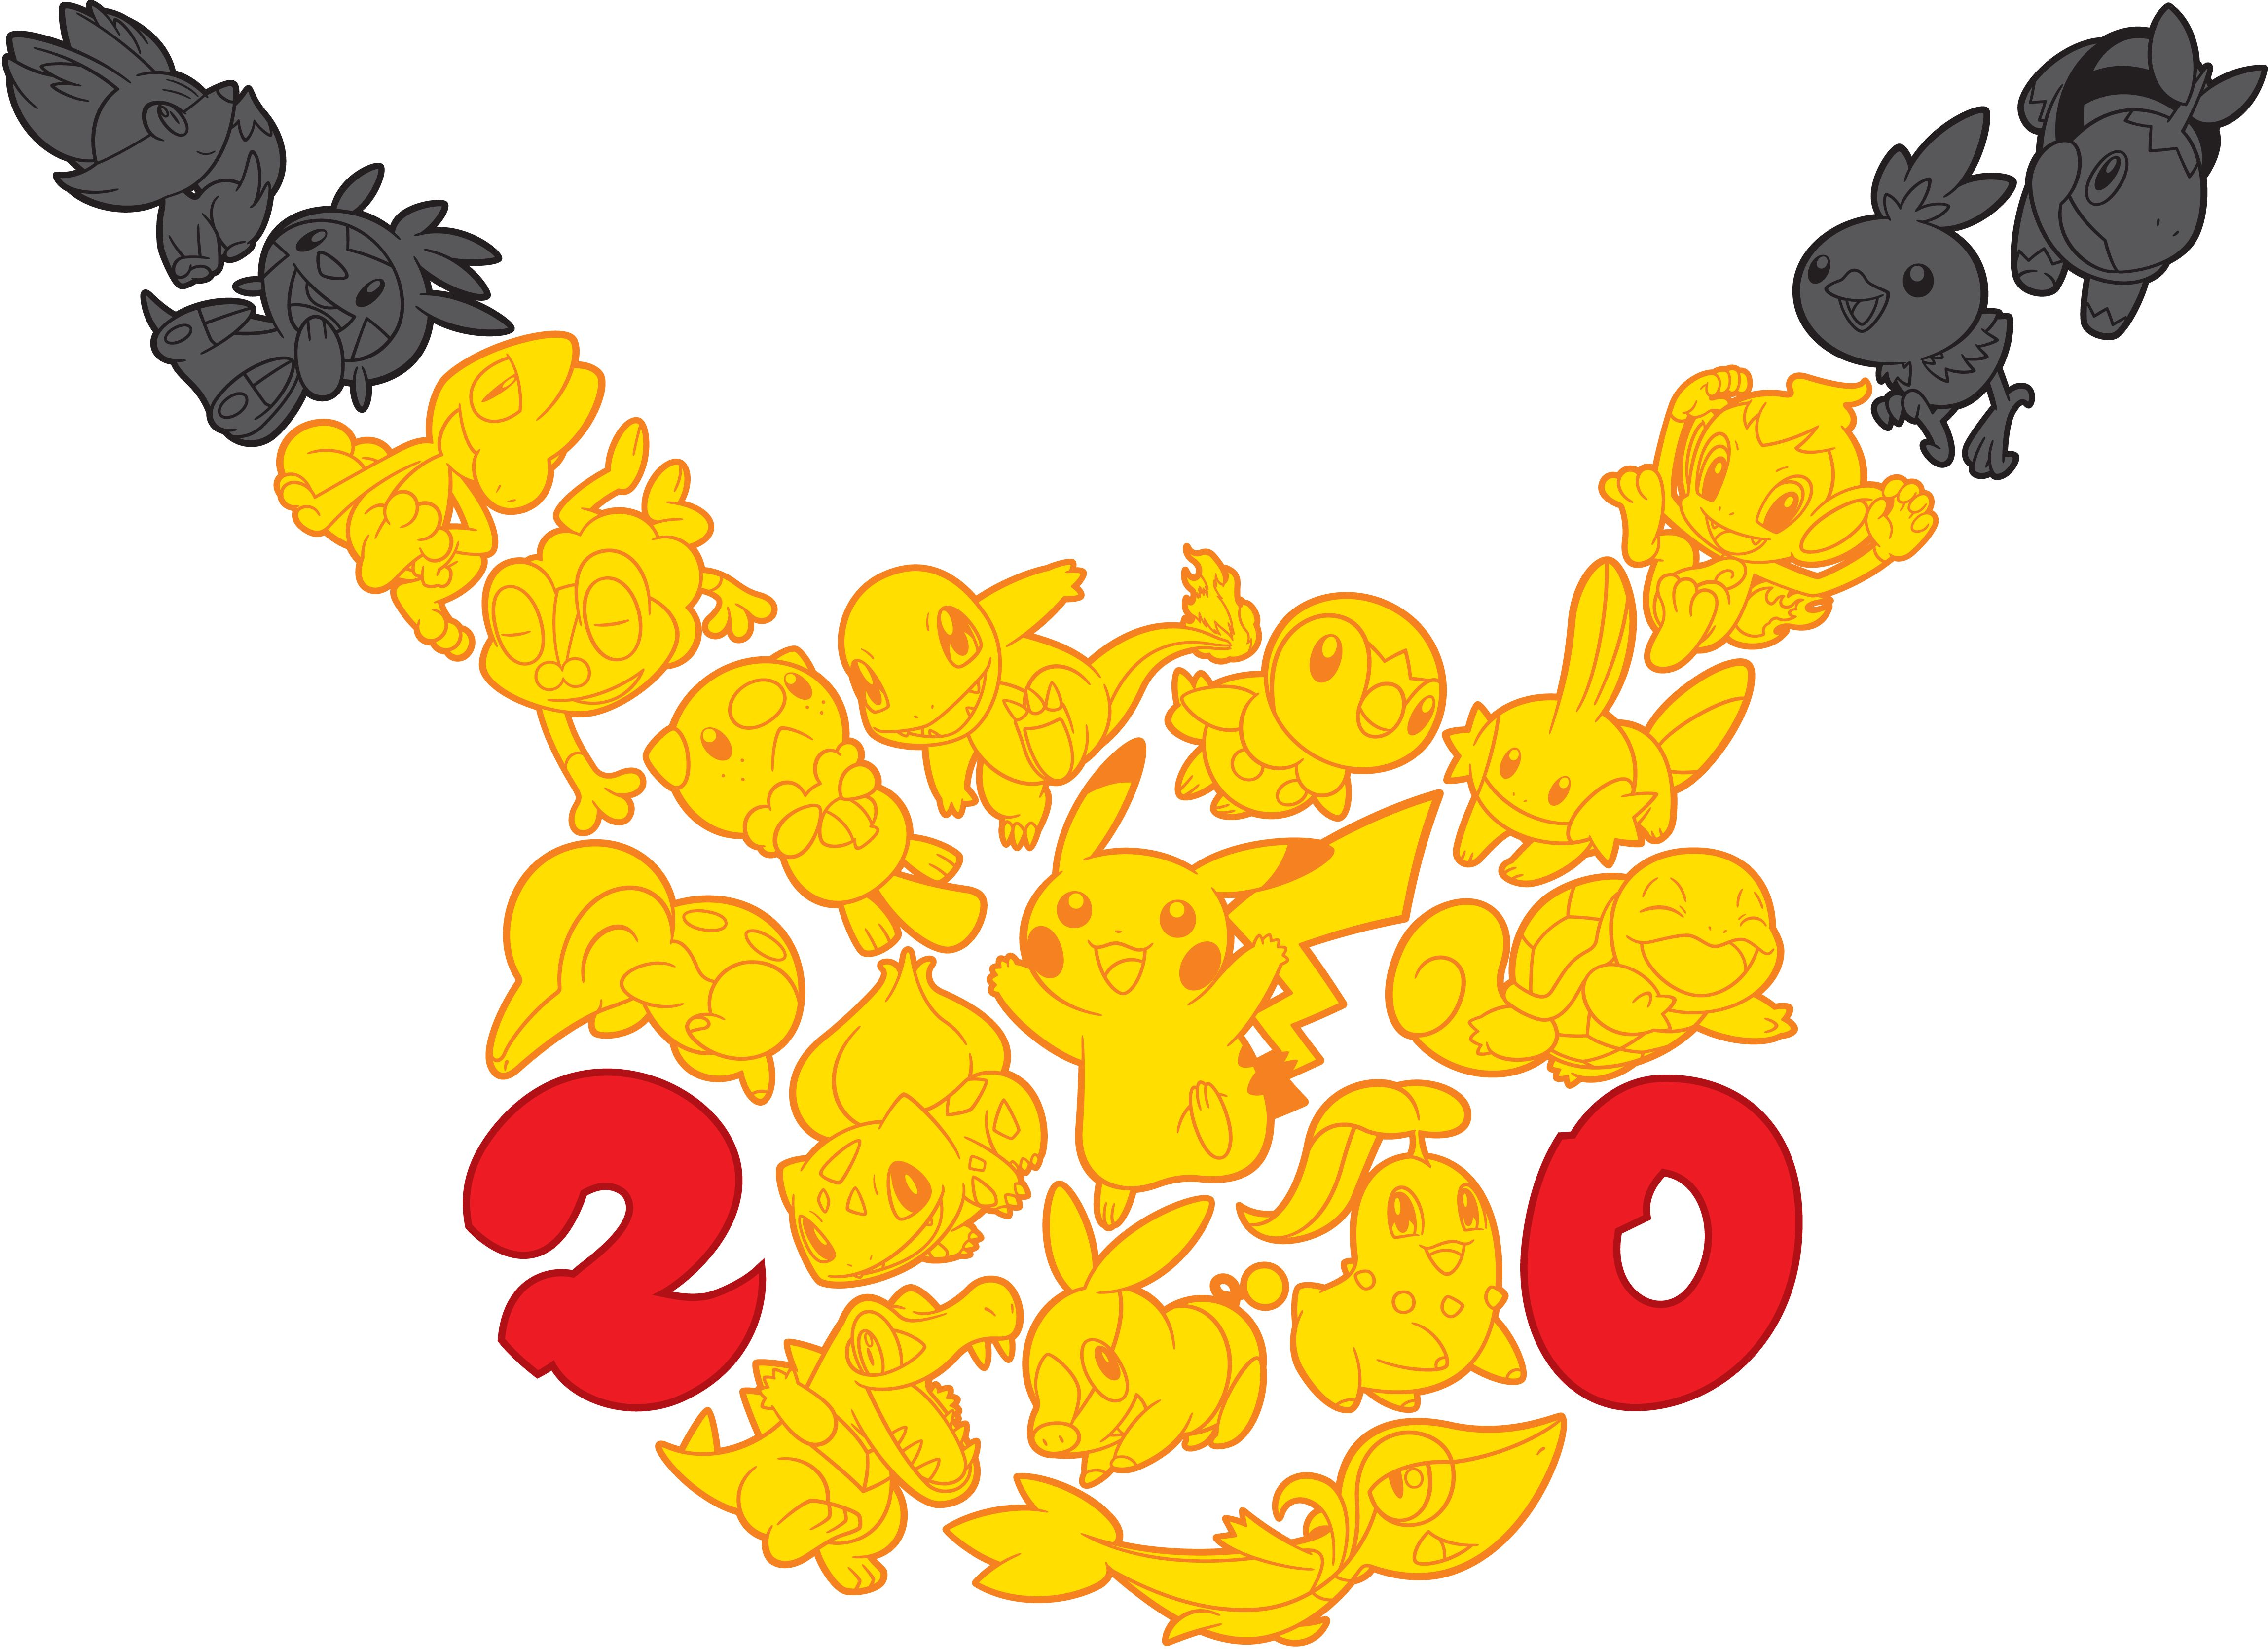 Pokémon Tcg 2 Triple Pack Gerações Genesect E Meloetta